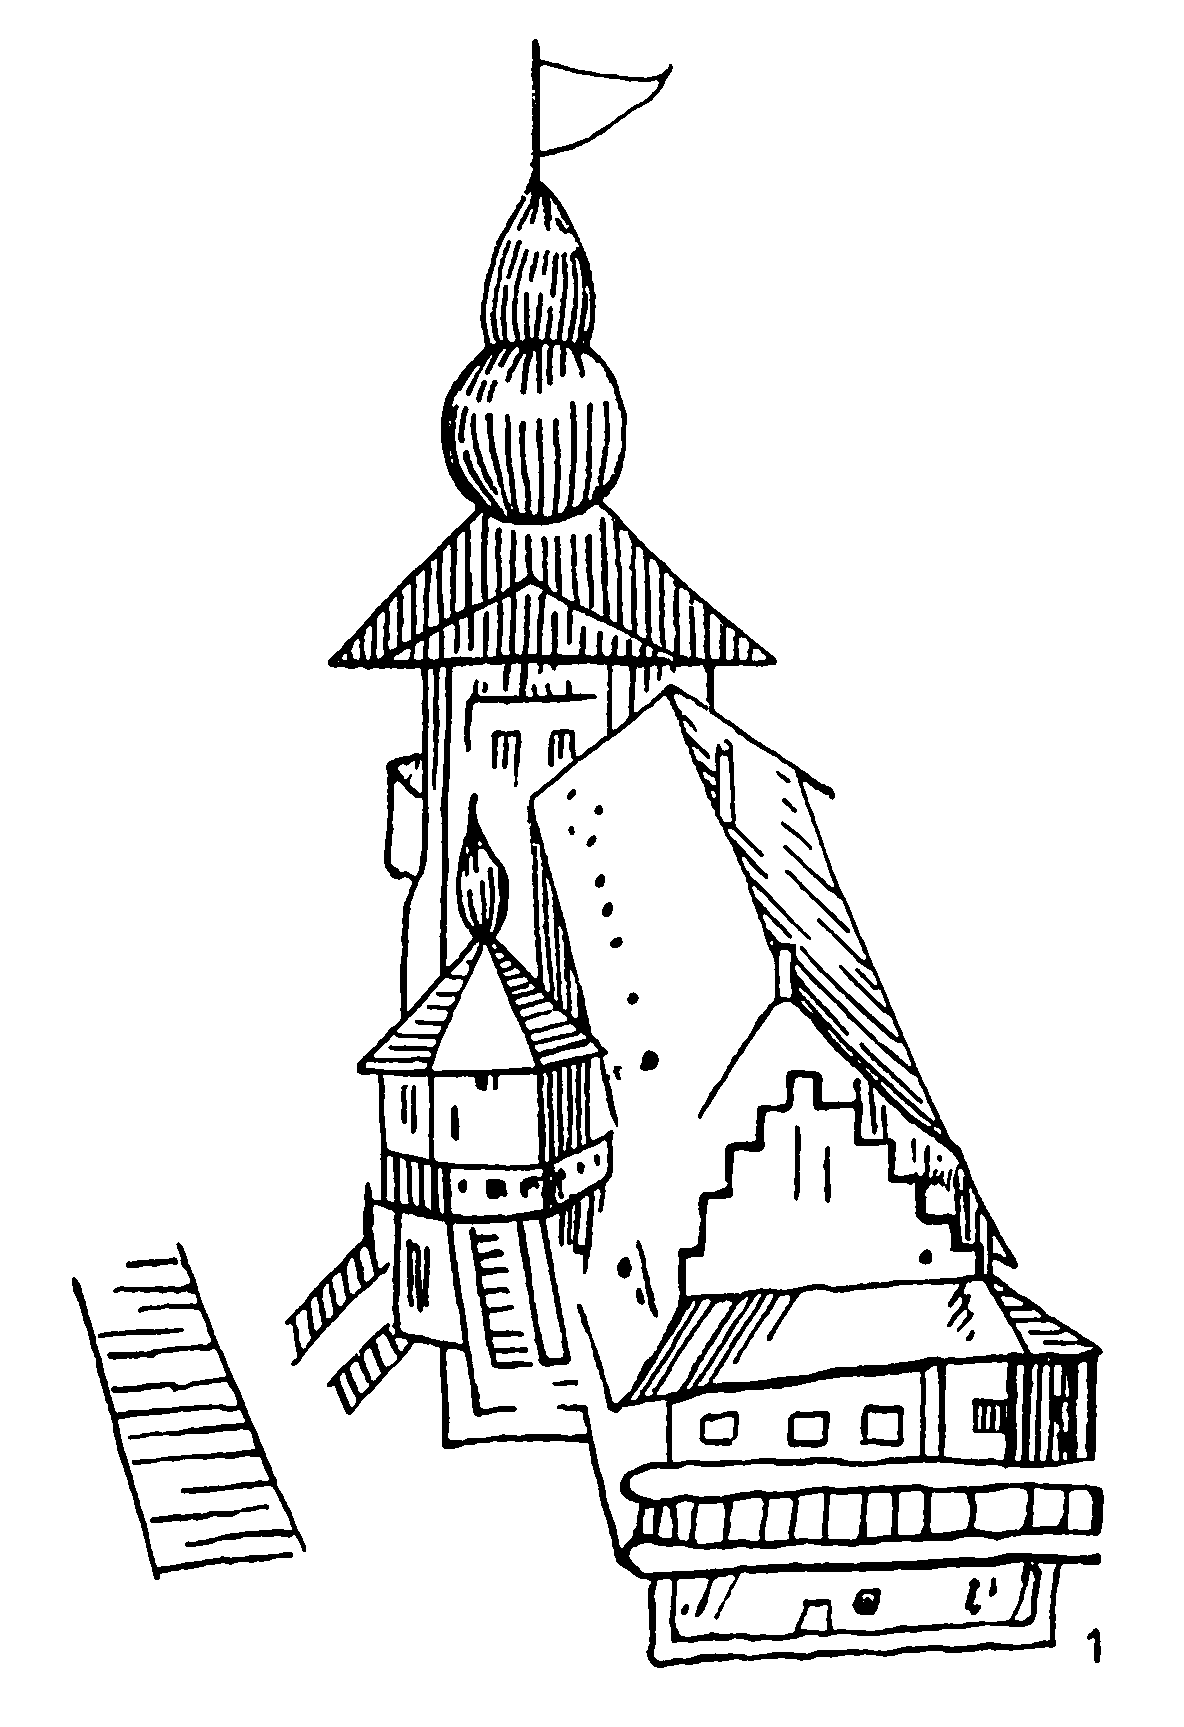 Витебск. Дом Огинского по «чертежу» Витебска 1664 г.